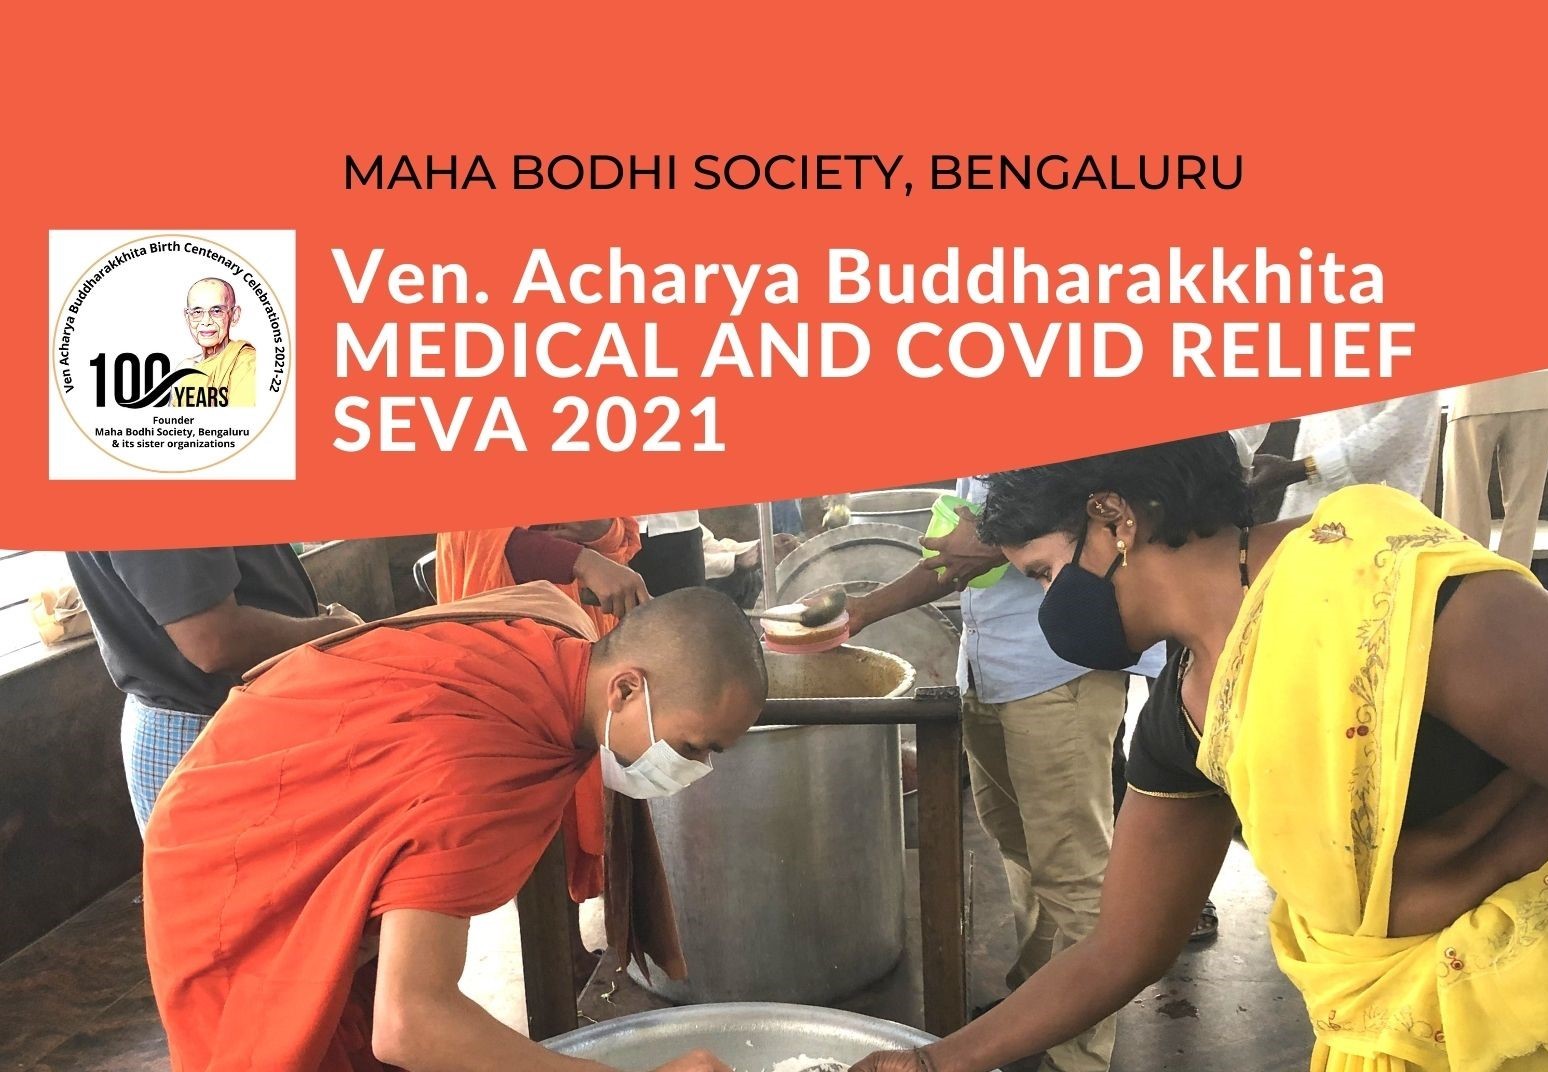 Ven. Acharya Buddharakkhita MEDICAL AND COVID RELIEF SEVA 2021